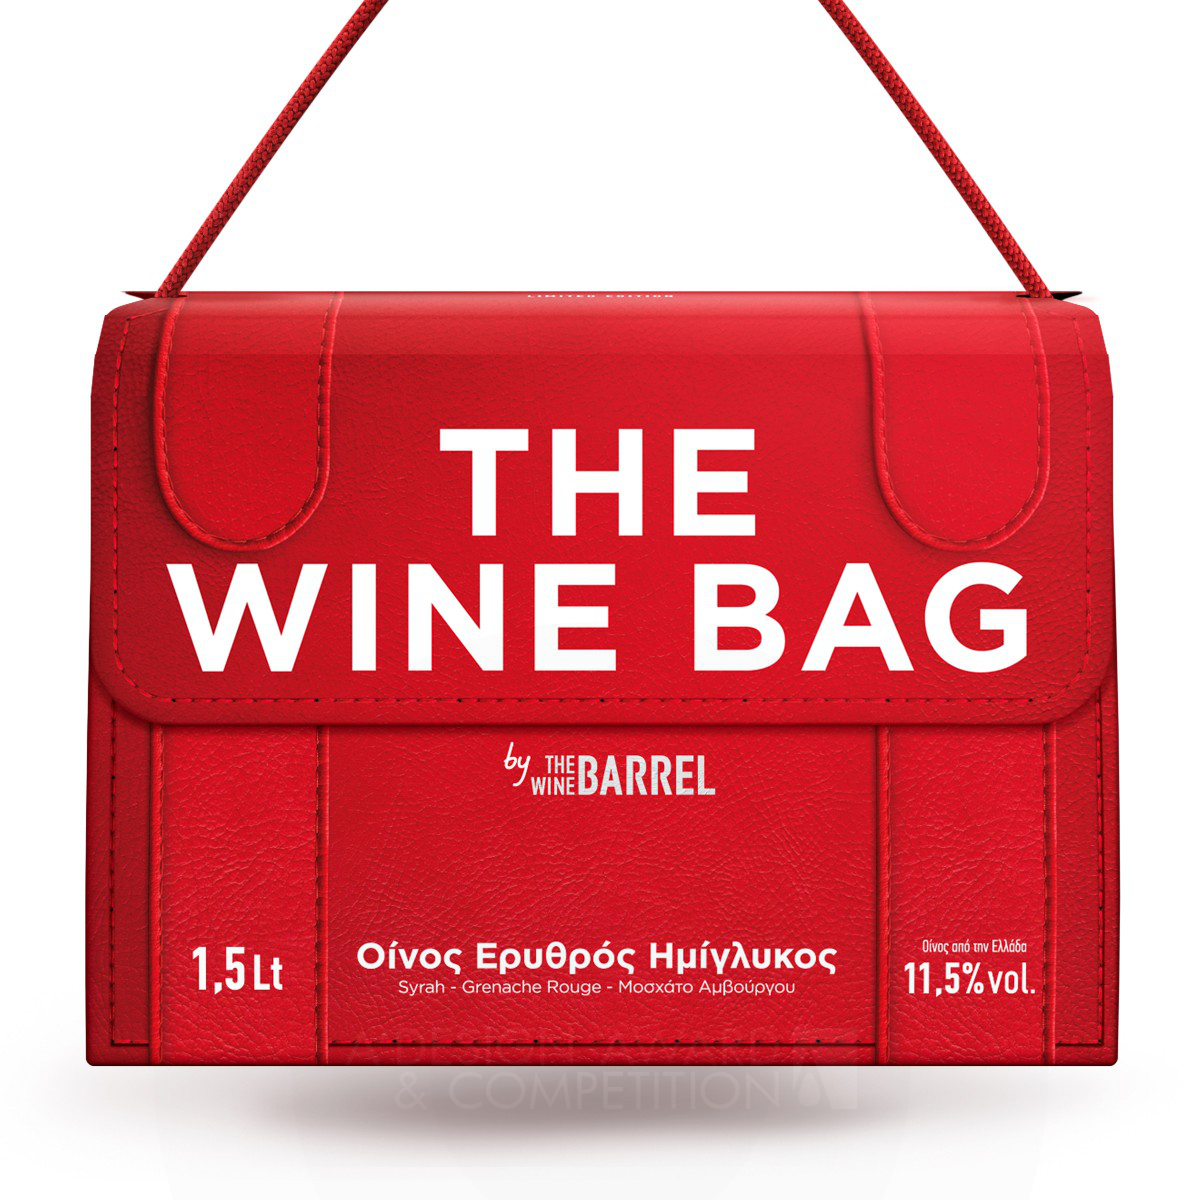 The Wine Bag Packaging